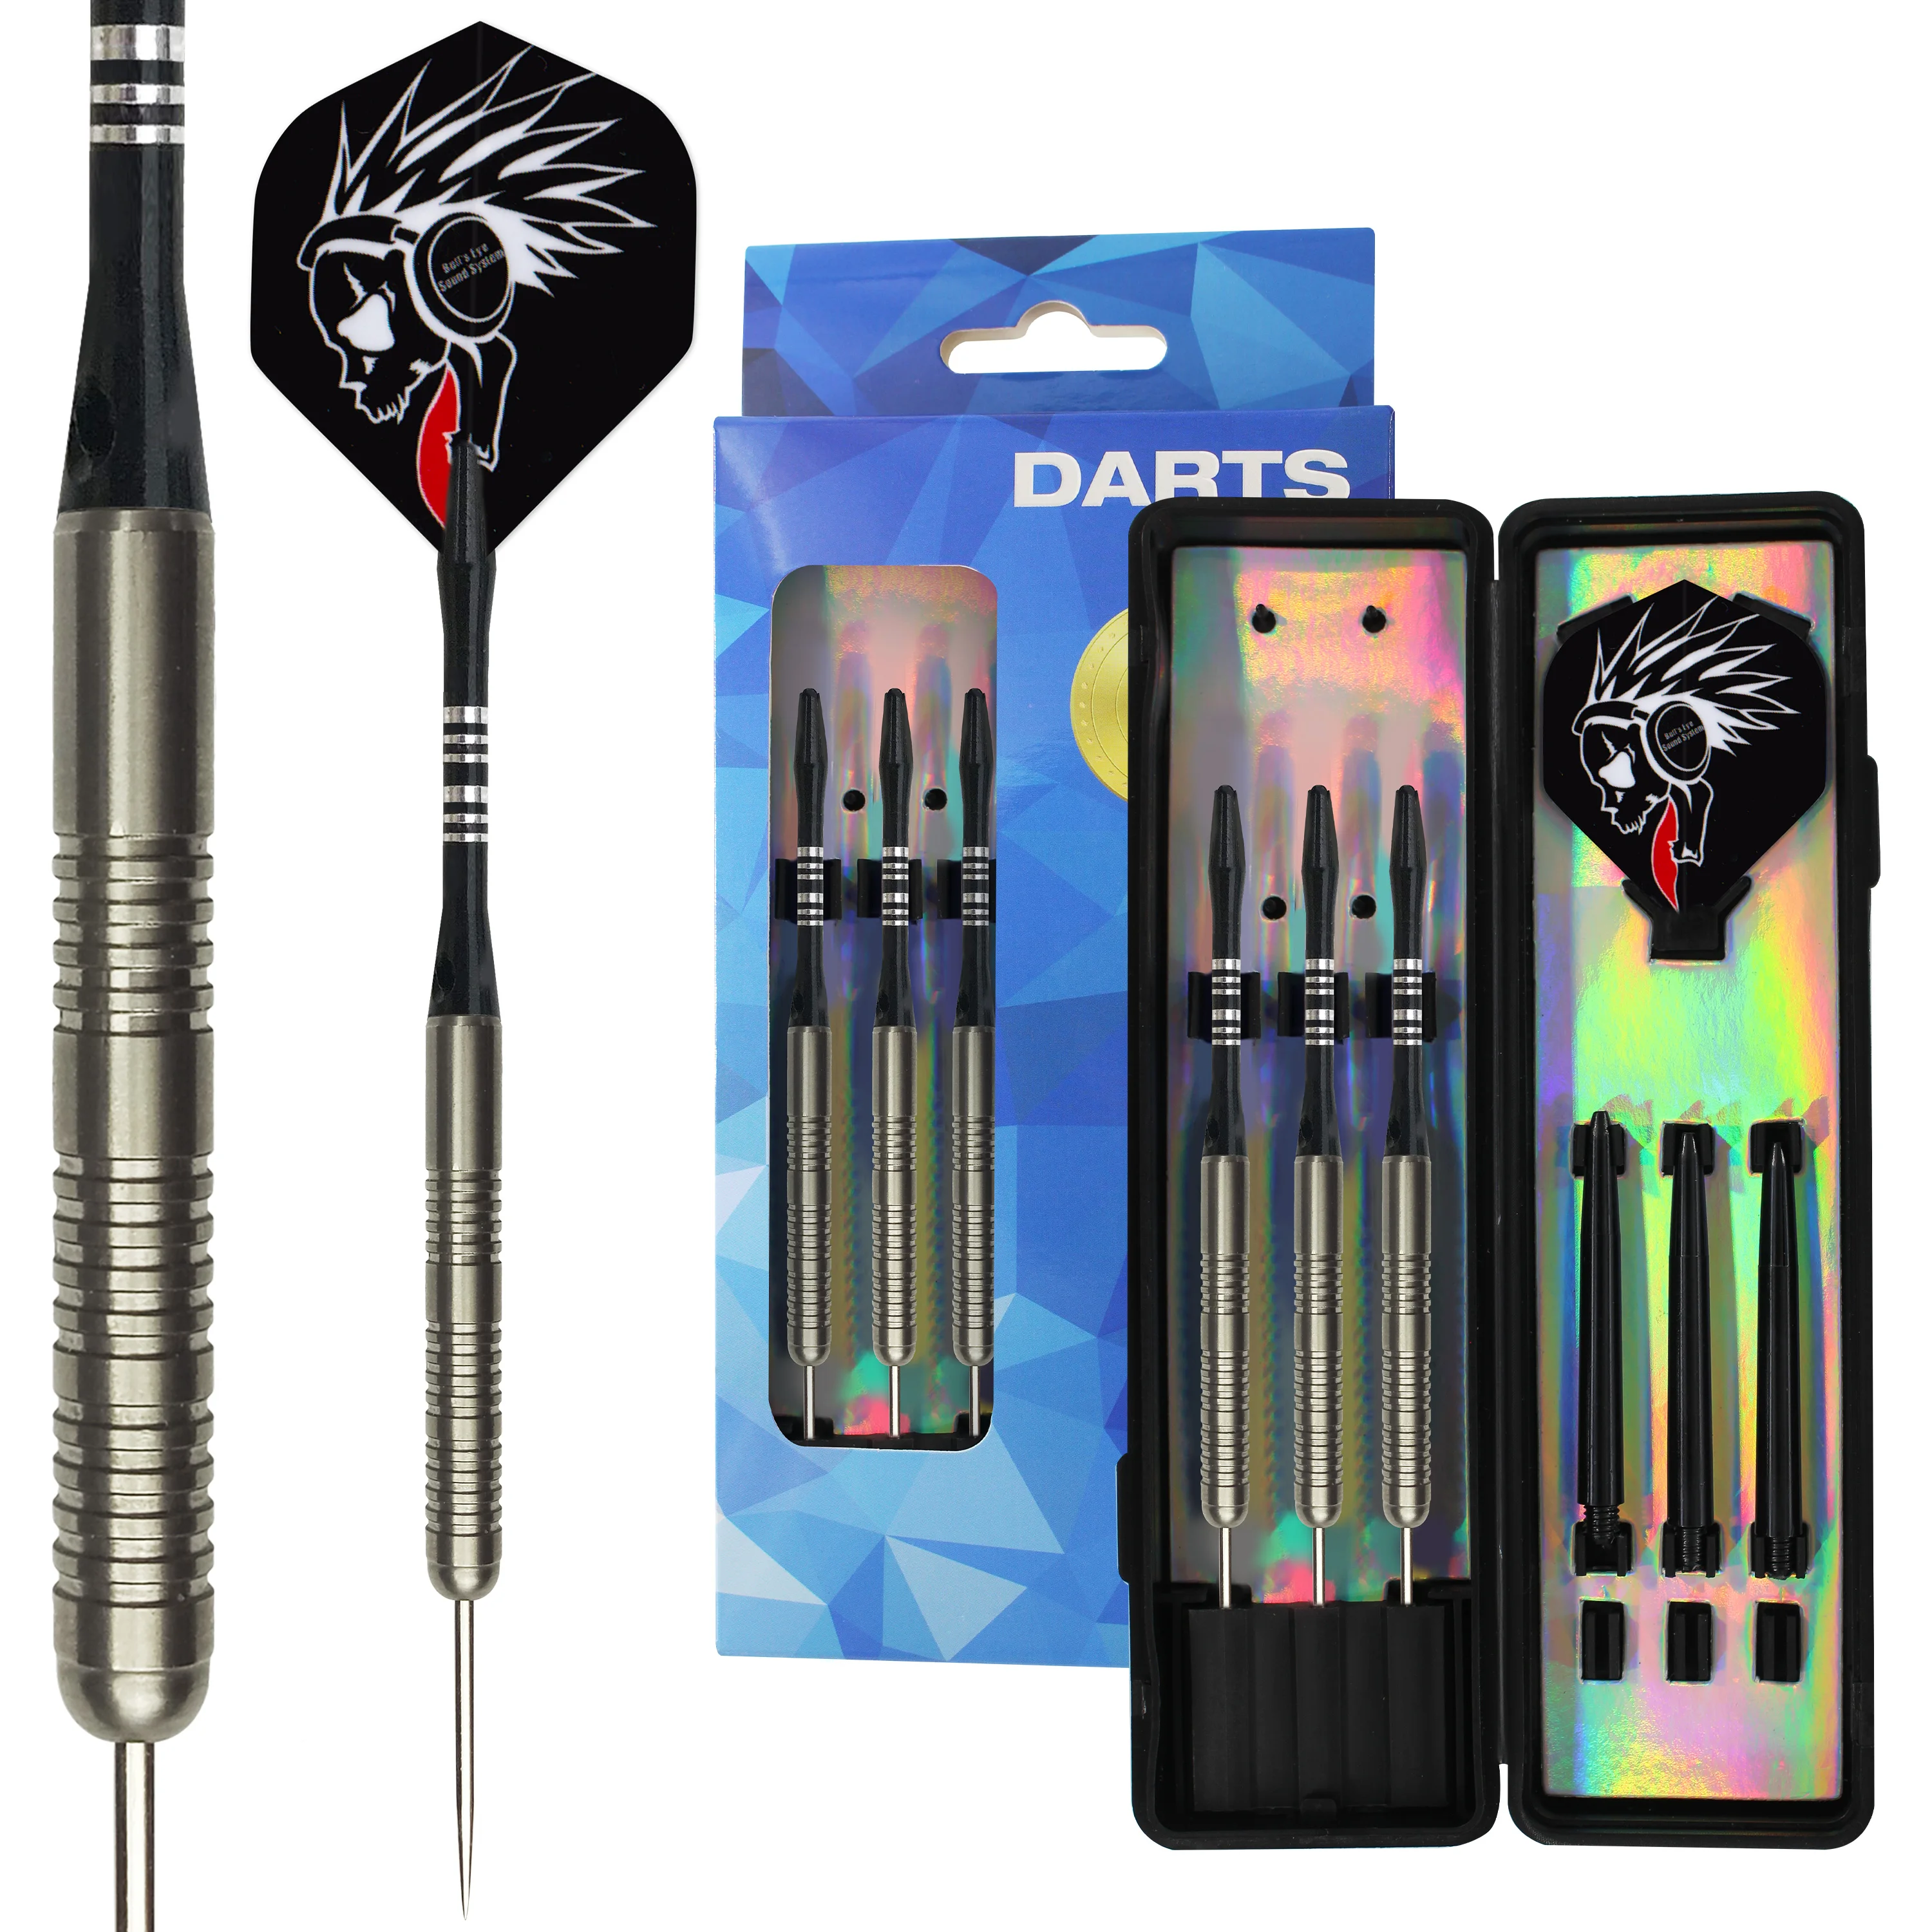 Wholesale 3 pc tungsten darts with case Steel tungsten dart barrels indoor or Outdoor dart game Accept Customization design From m.alibaba.com